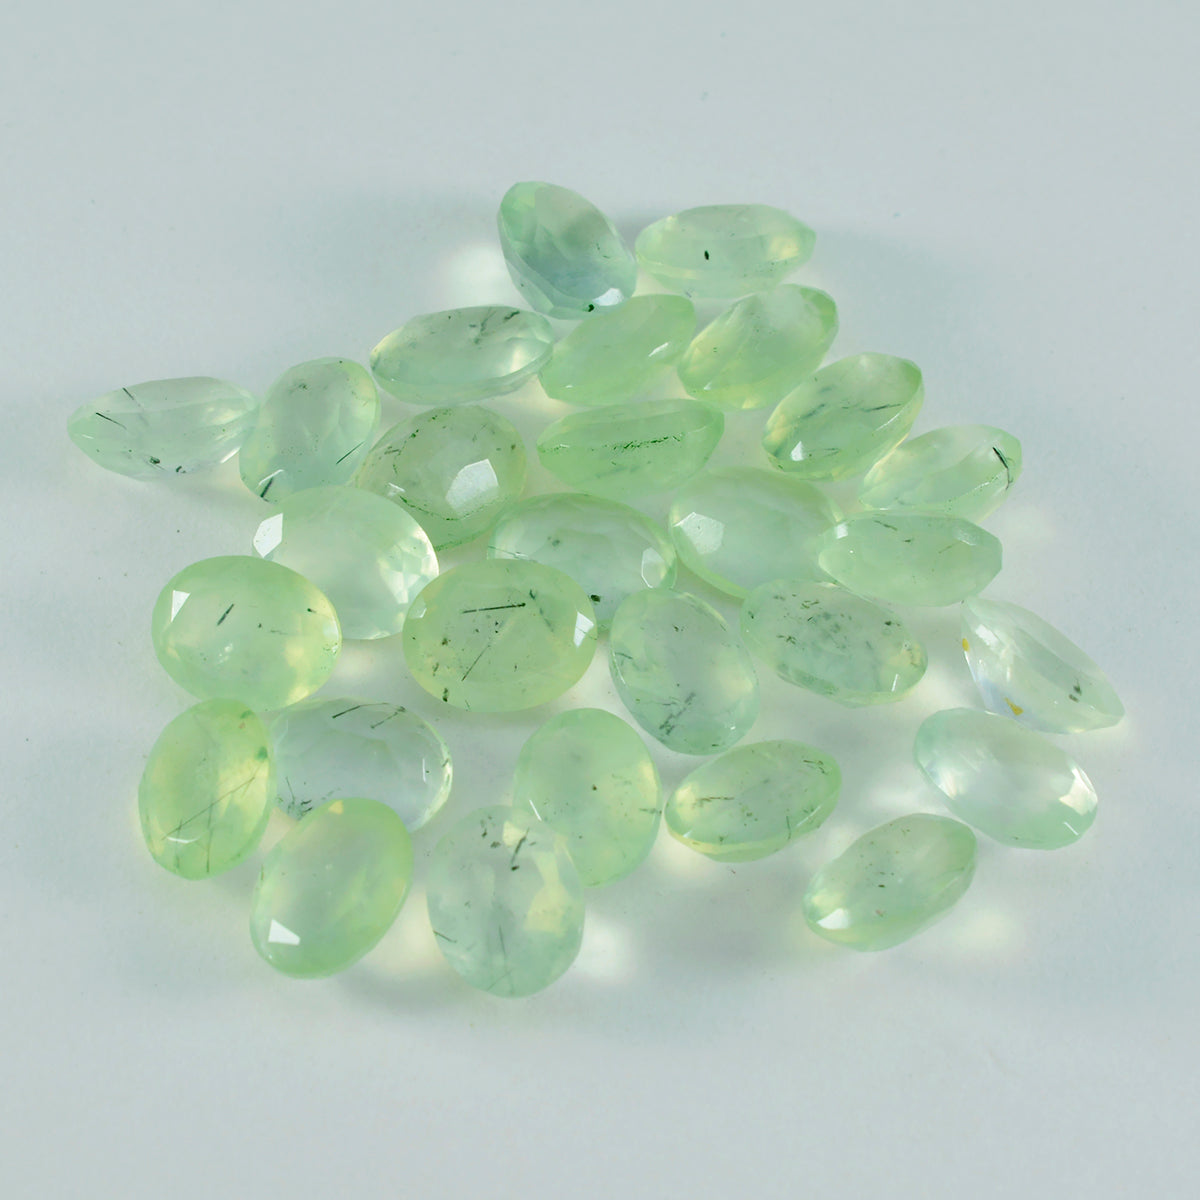 Riyogems 1PC Green Prehnite Faceted 3x5 mm Oval Shape Nice Quality Gems